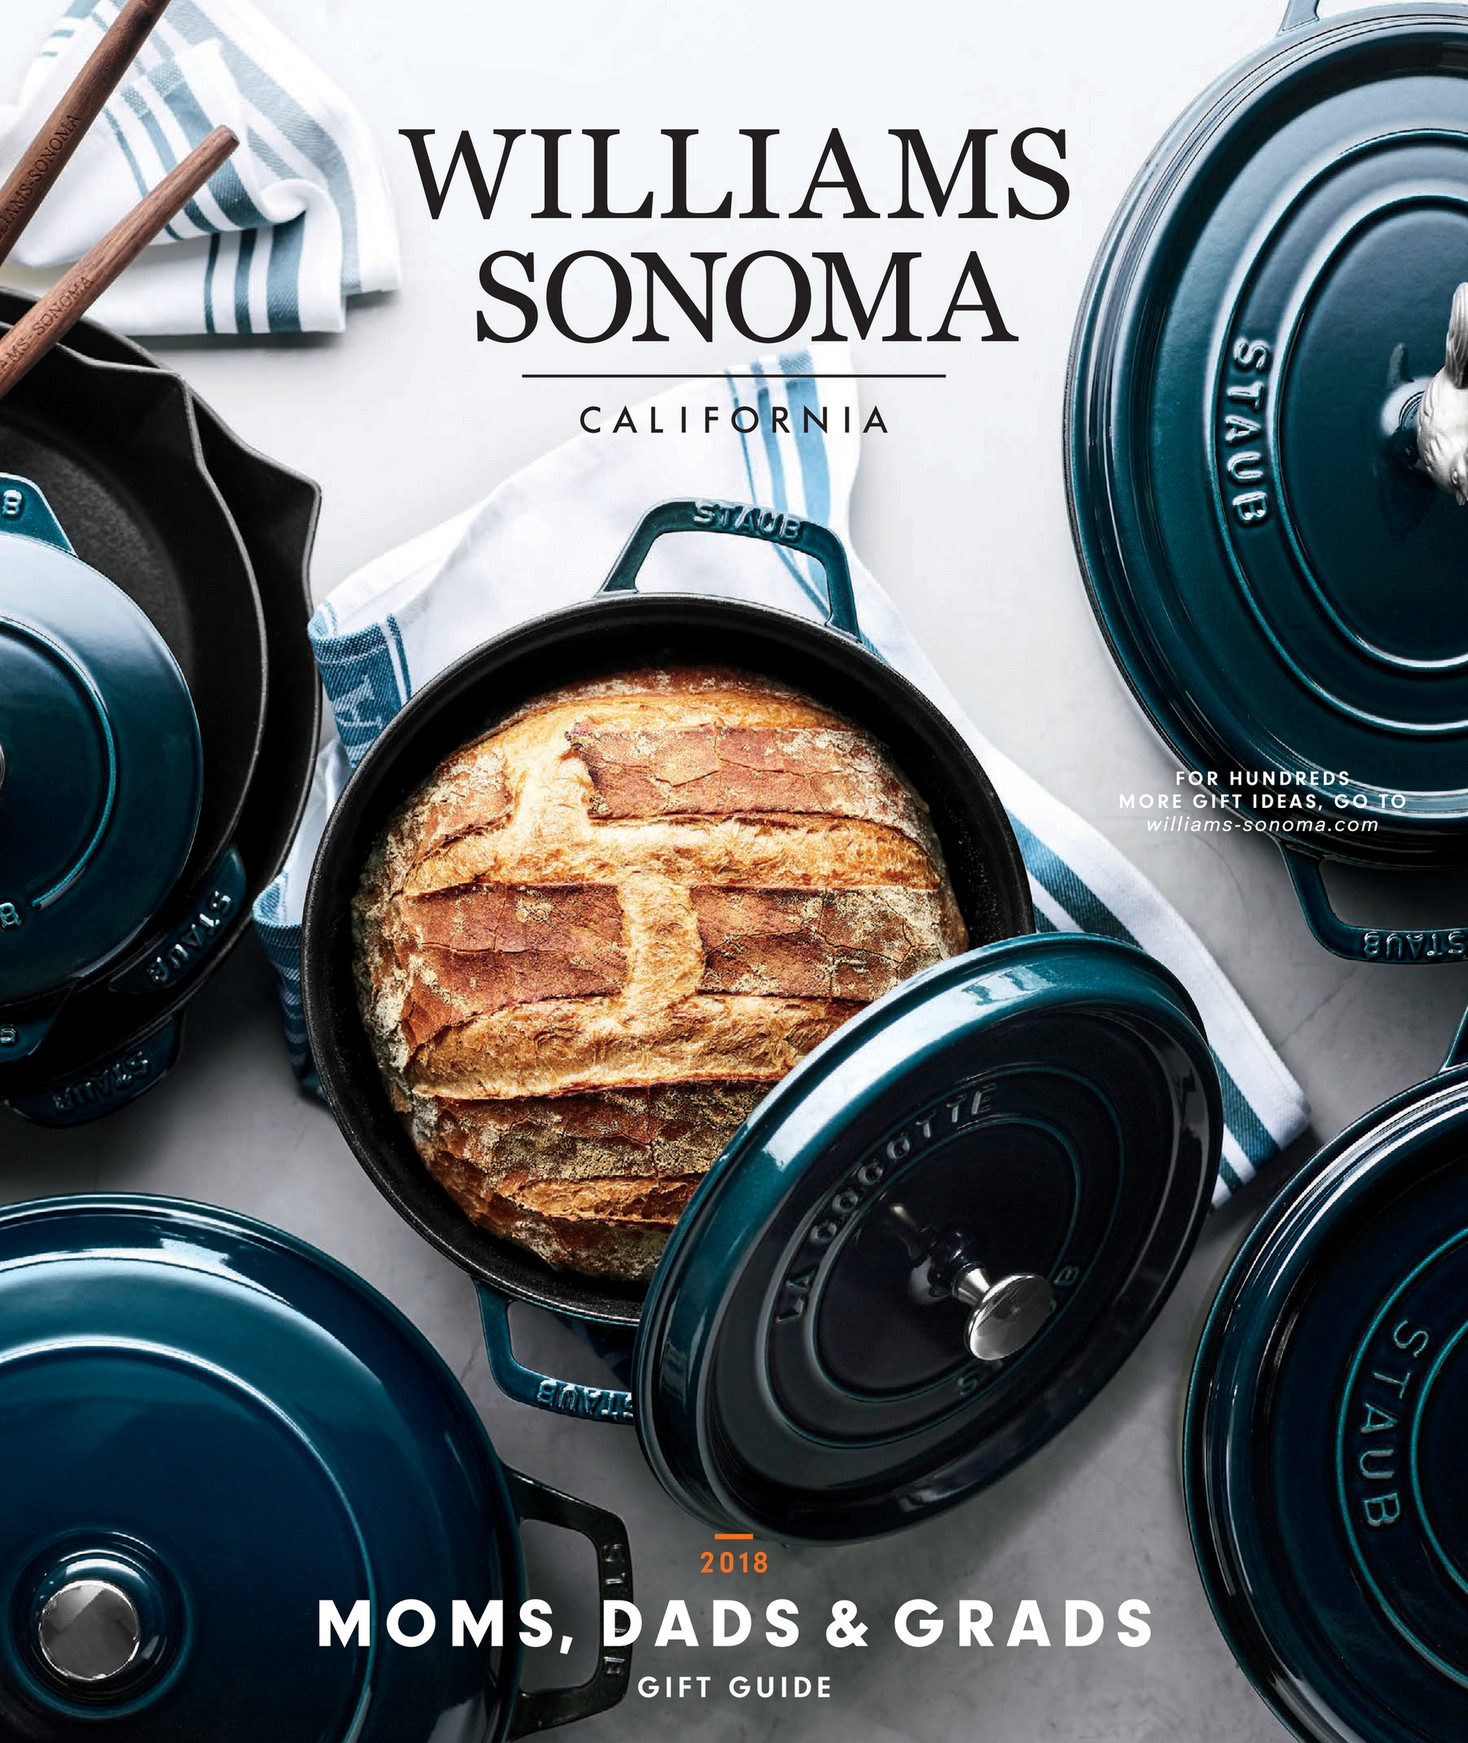 Williams-Sonoma - Spring 18 Vendor Funded Gift Guide - Calphalon Premier  Space Saving Nonstick 10-Piece Cookware Set